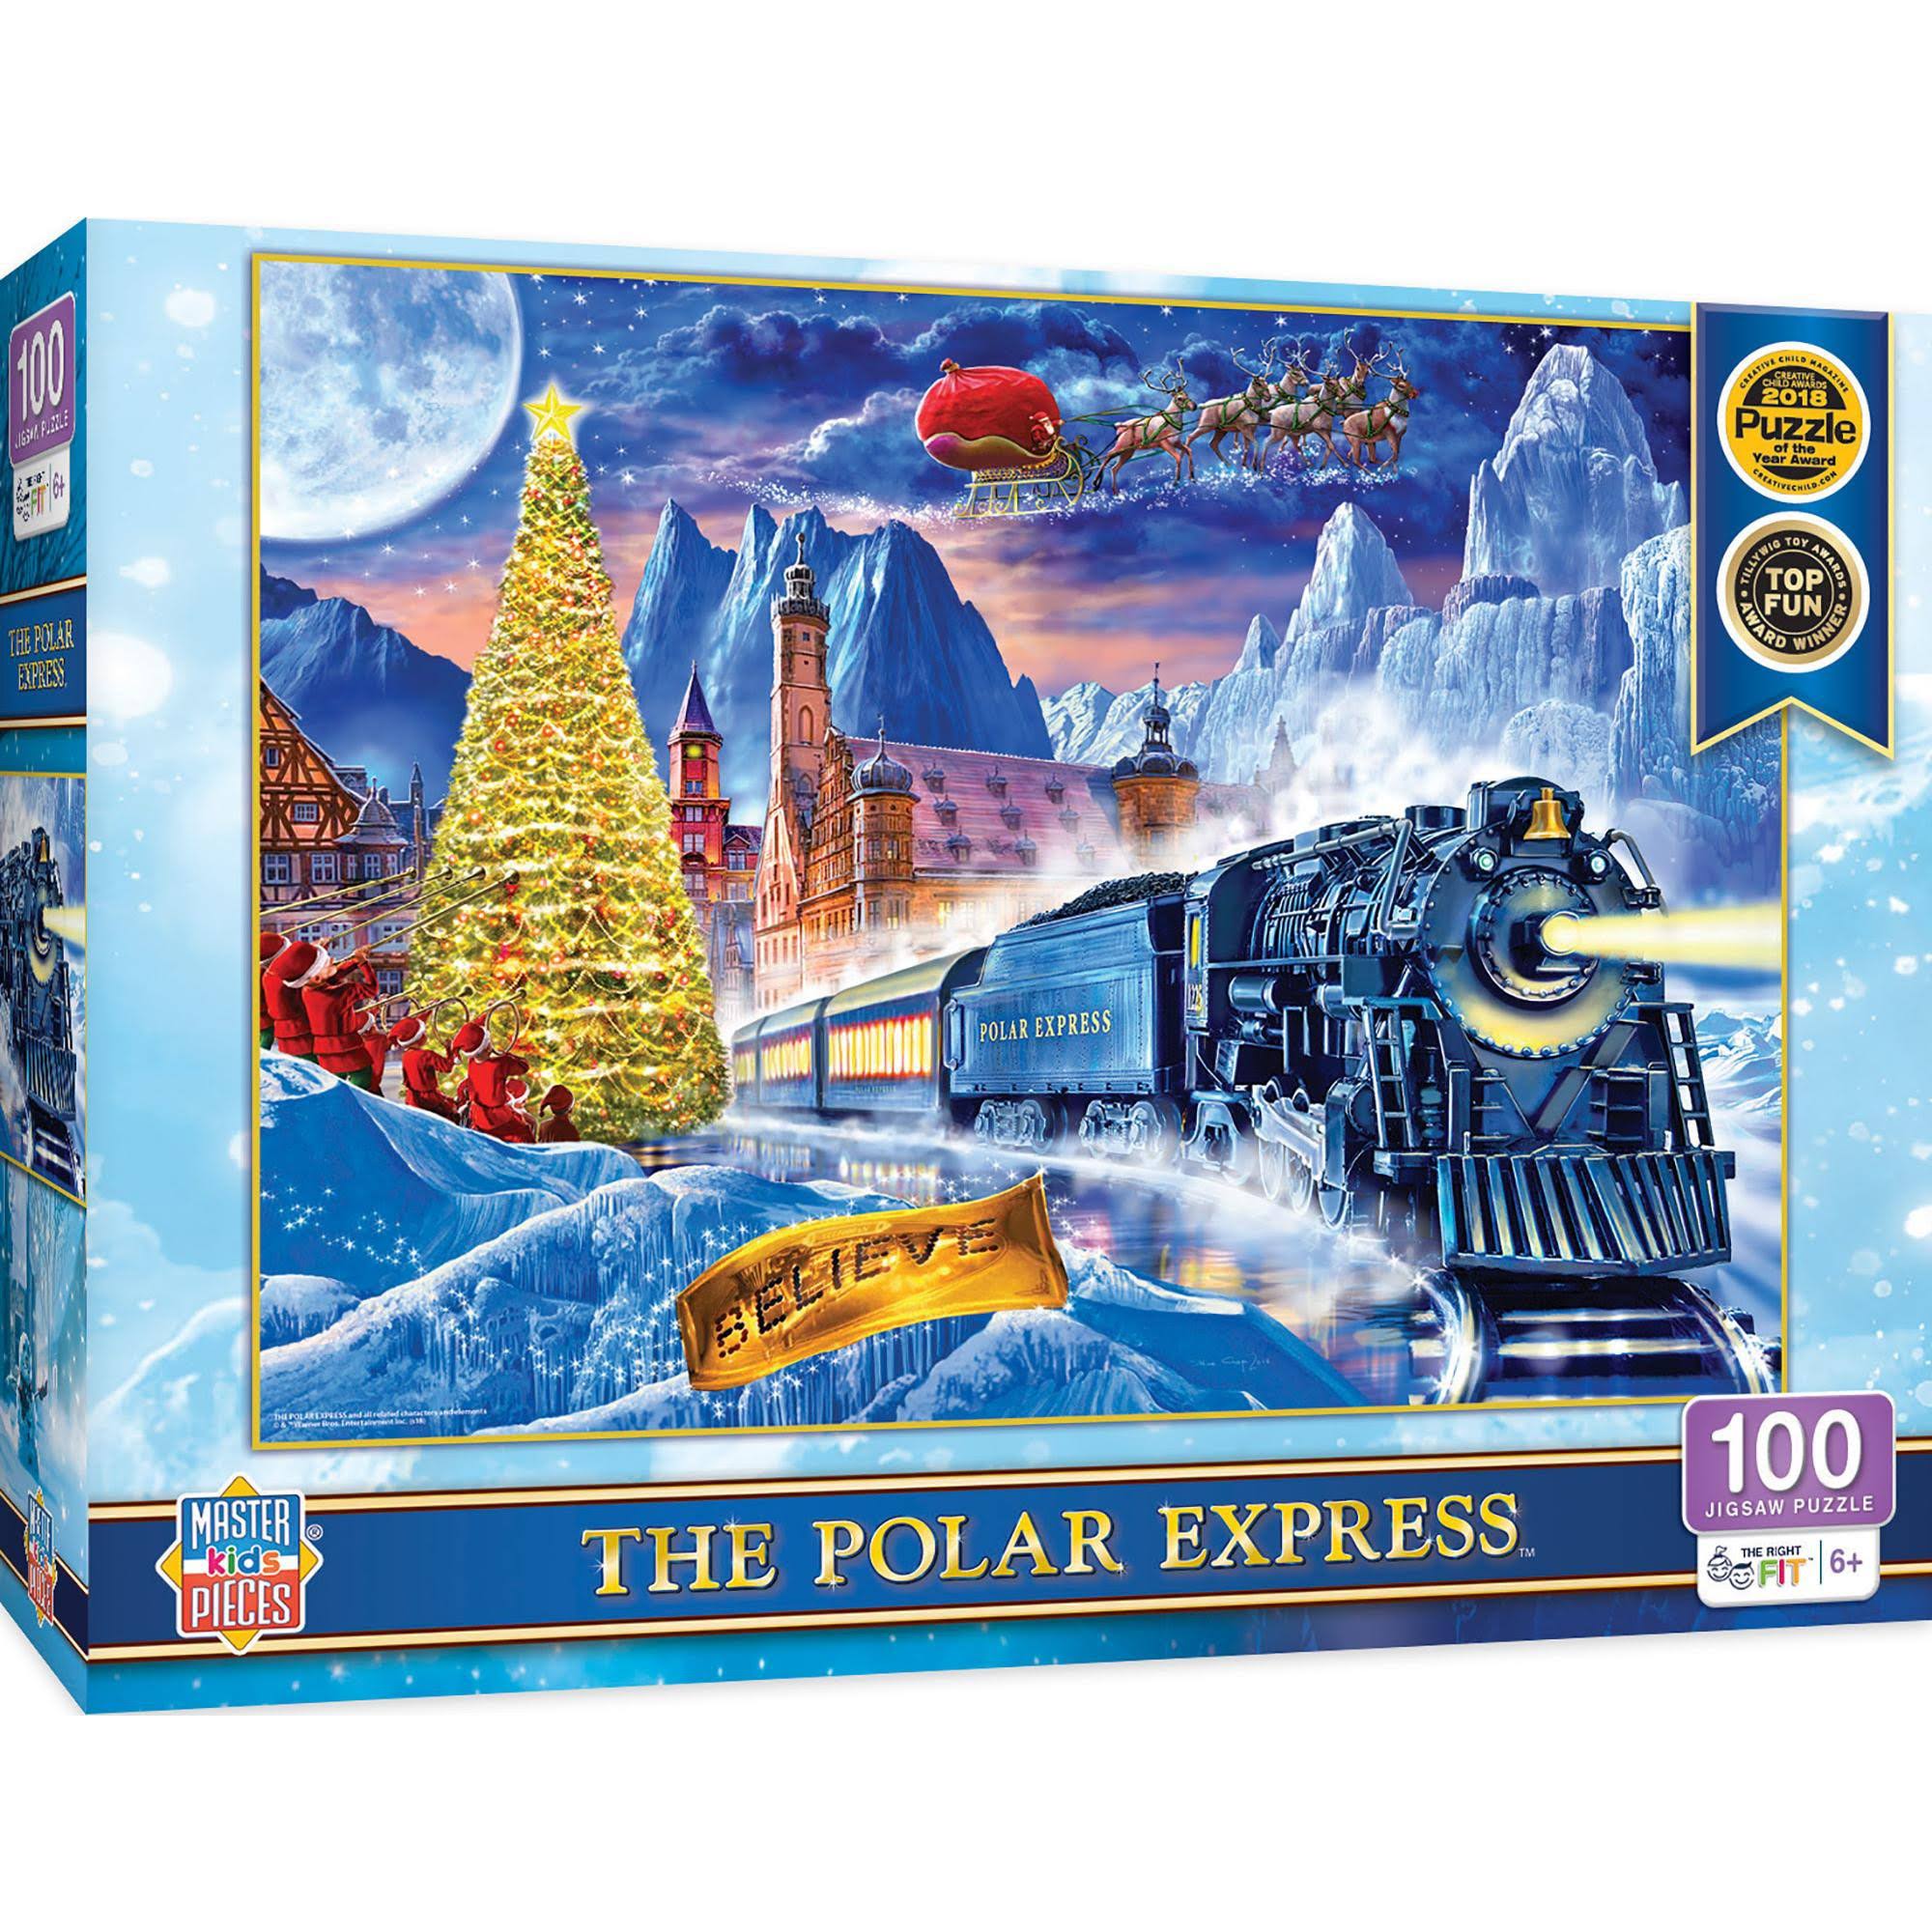 The Polar Express - 100 Piece Puzzle